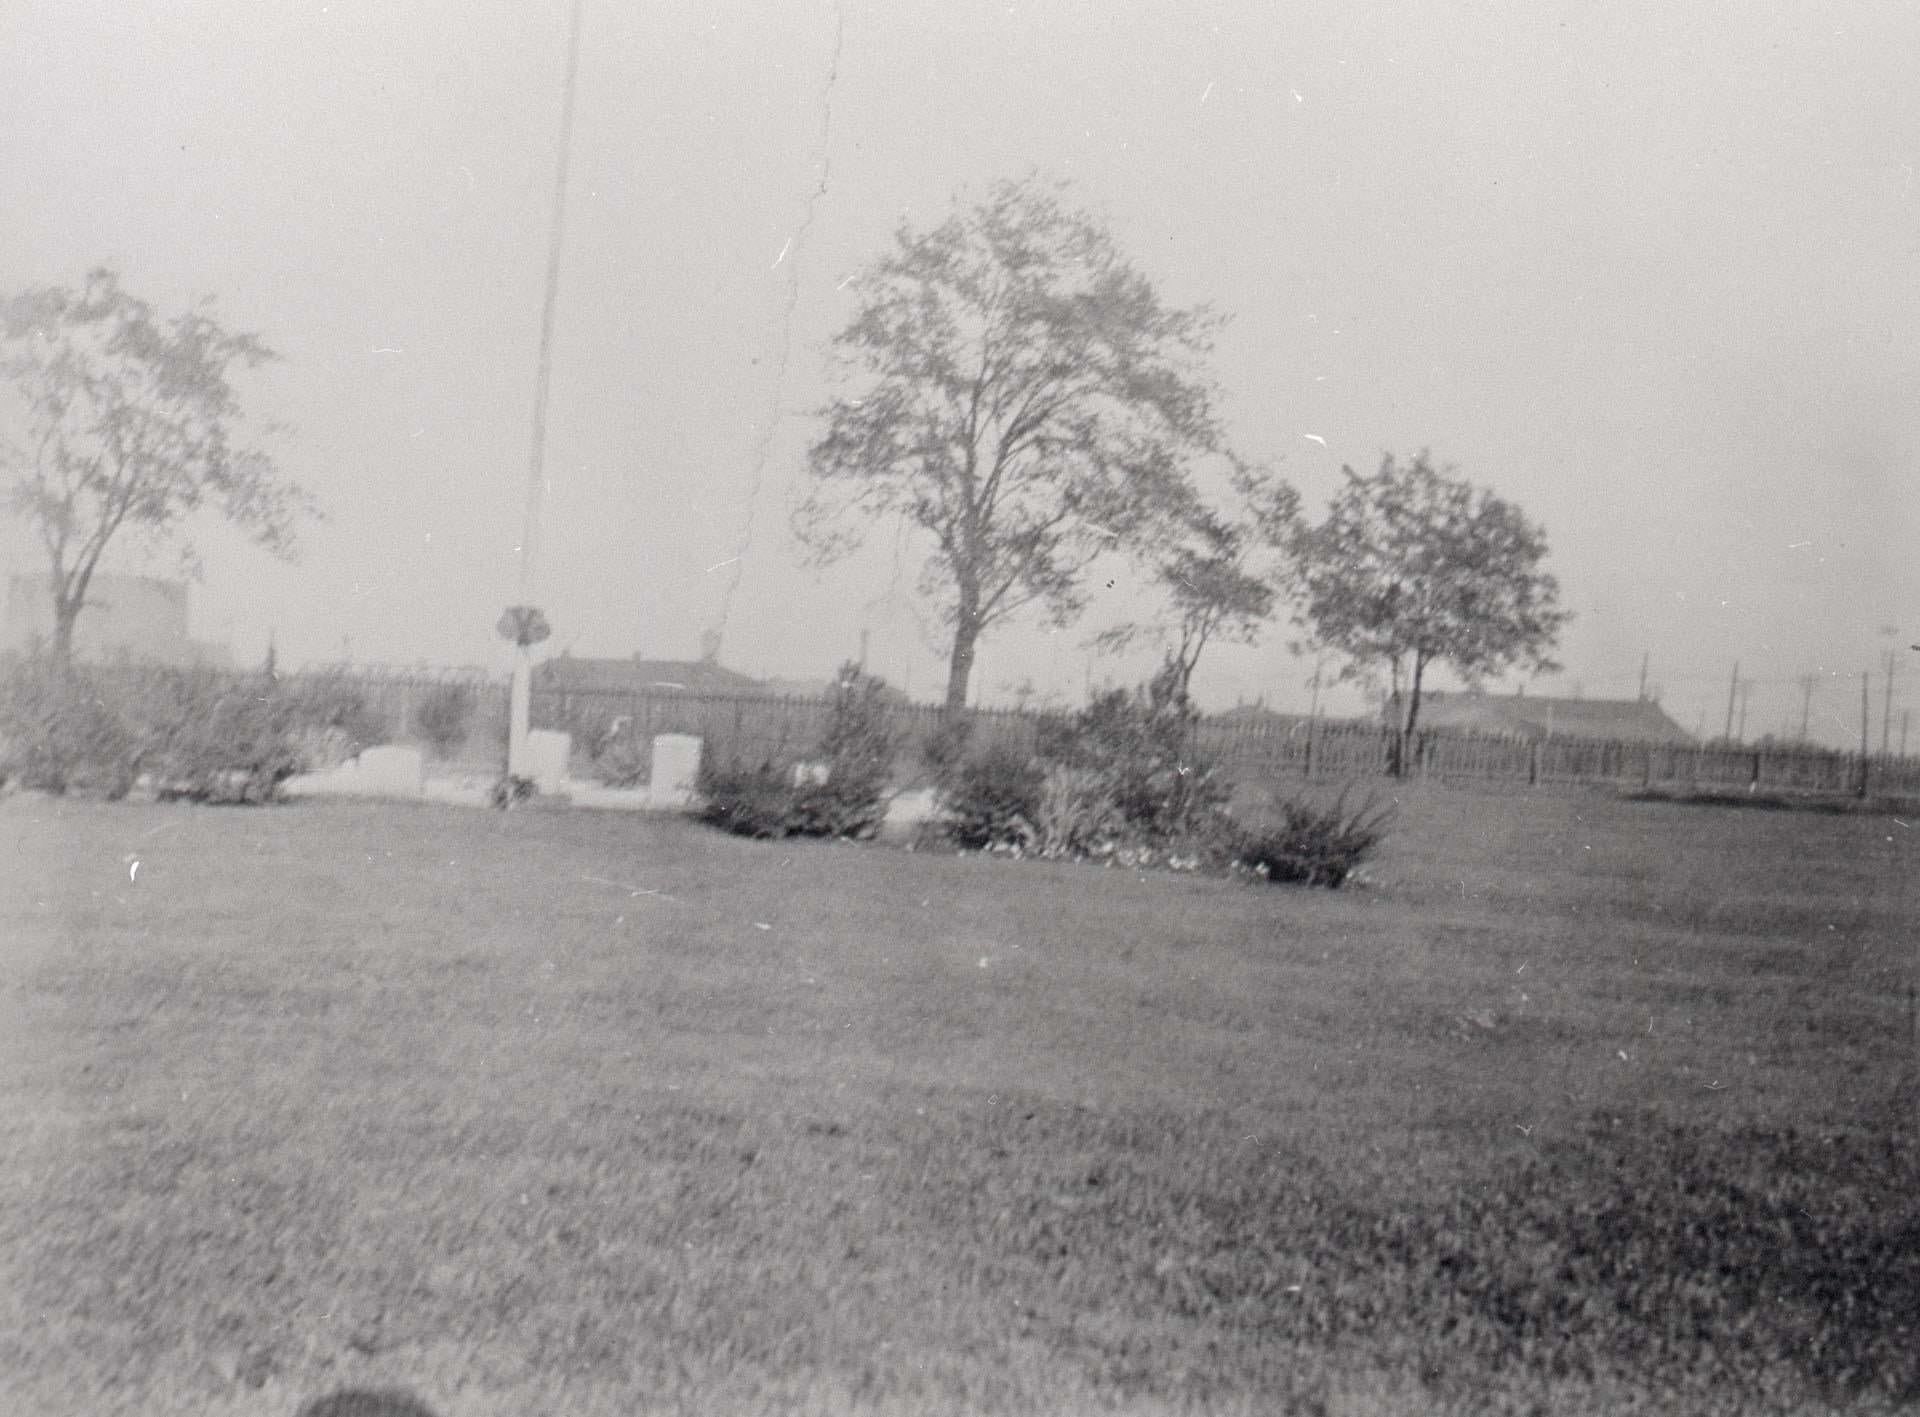 Military Burying Ground, Strachan Avenue, west of Fort York, 1926.